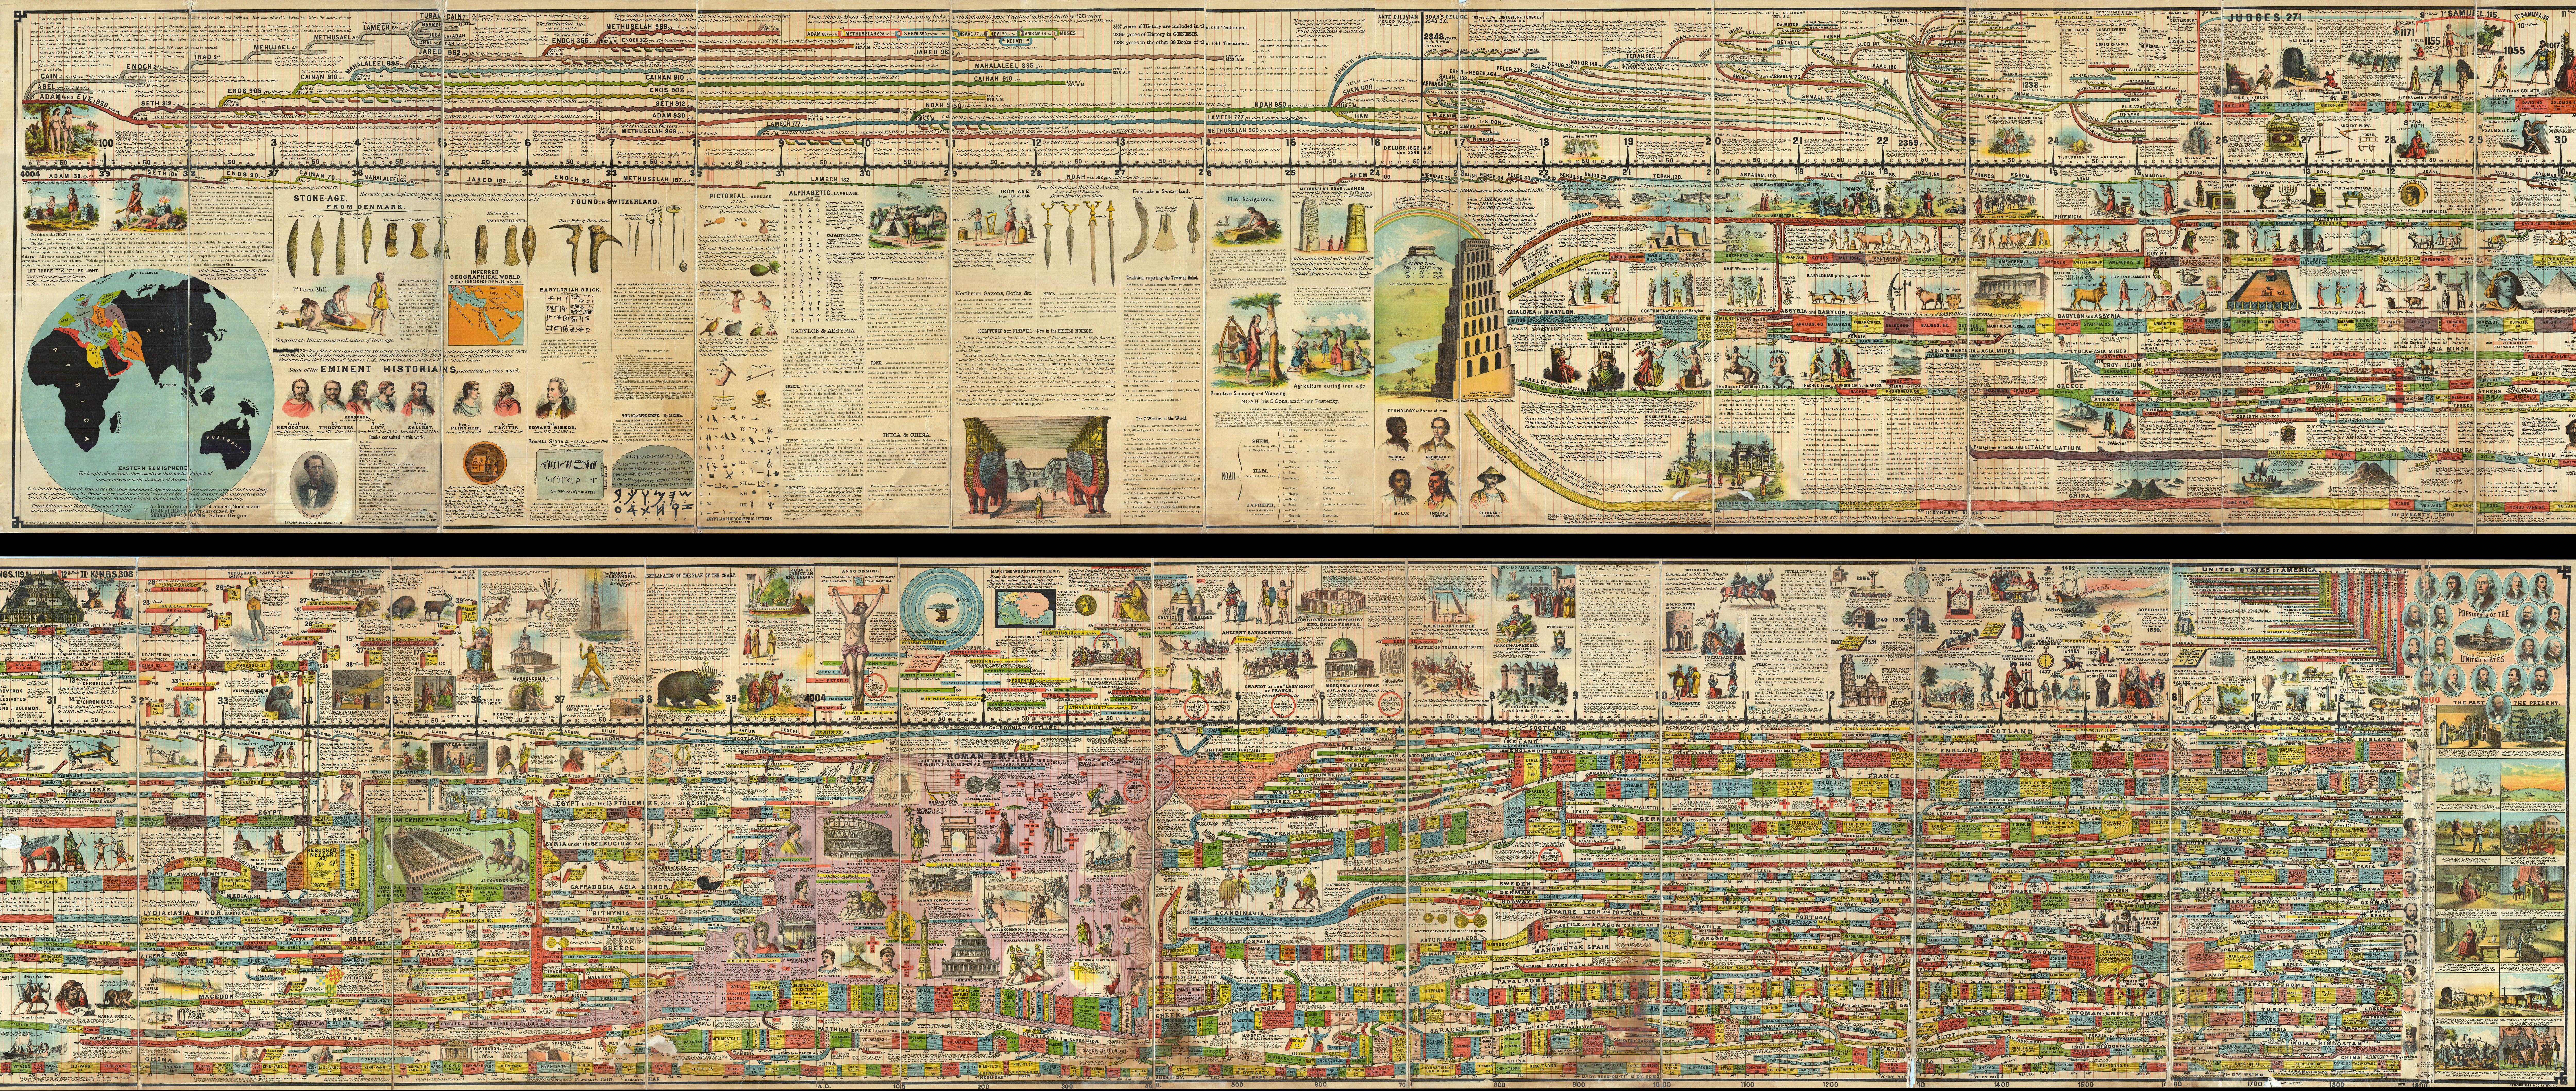 1878_adams_monumental_illustrated_panorama_of_history_-_geographicus_-_worldhistory-adams-1871